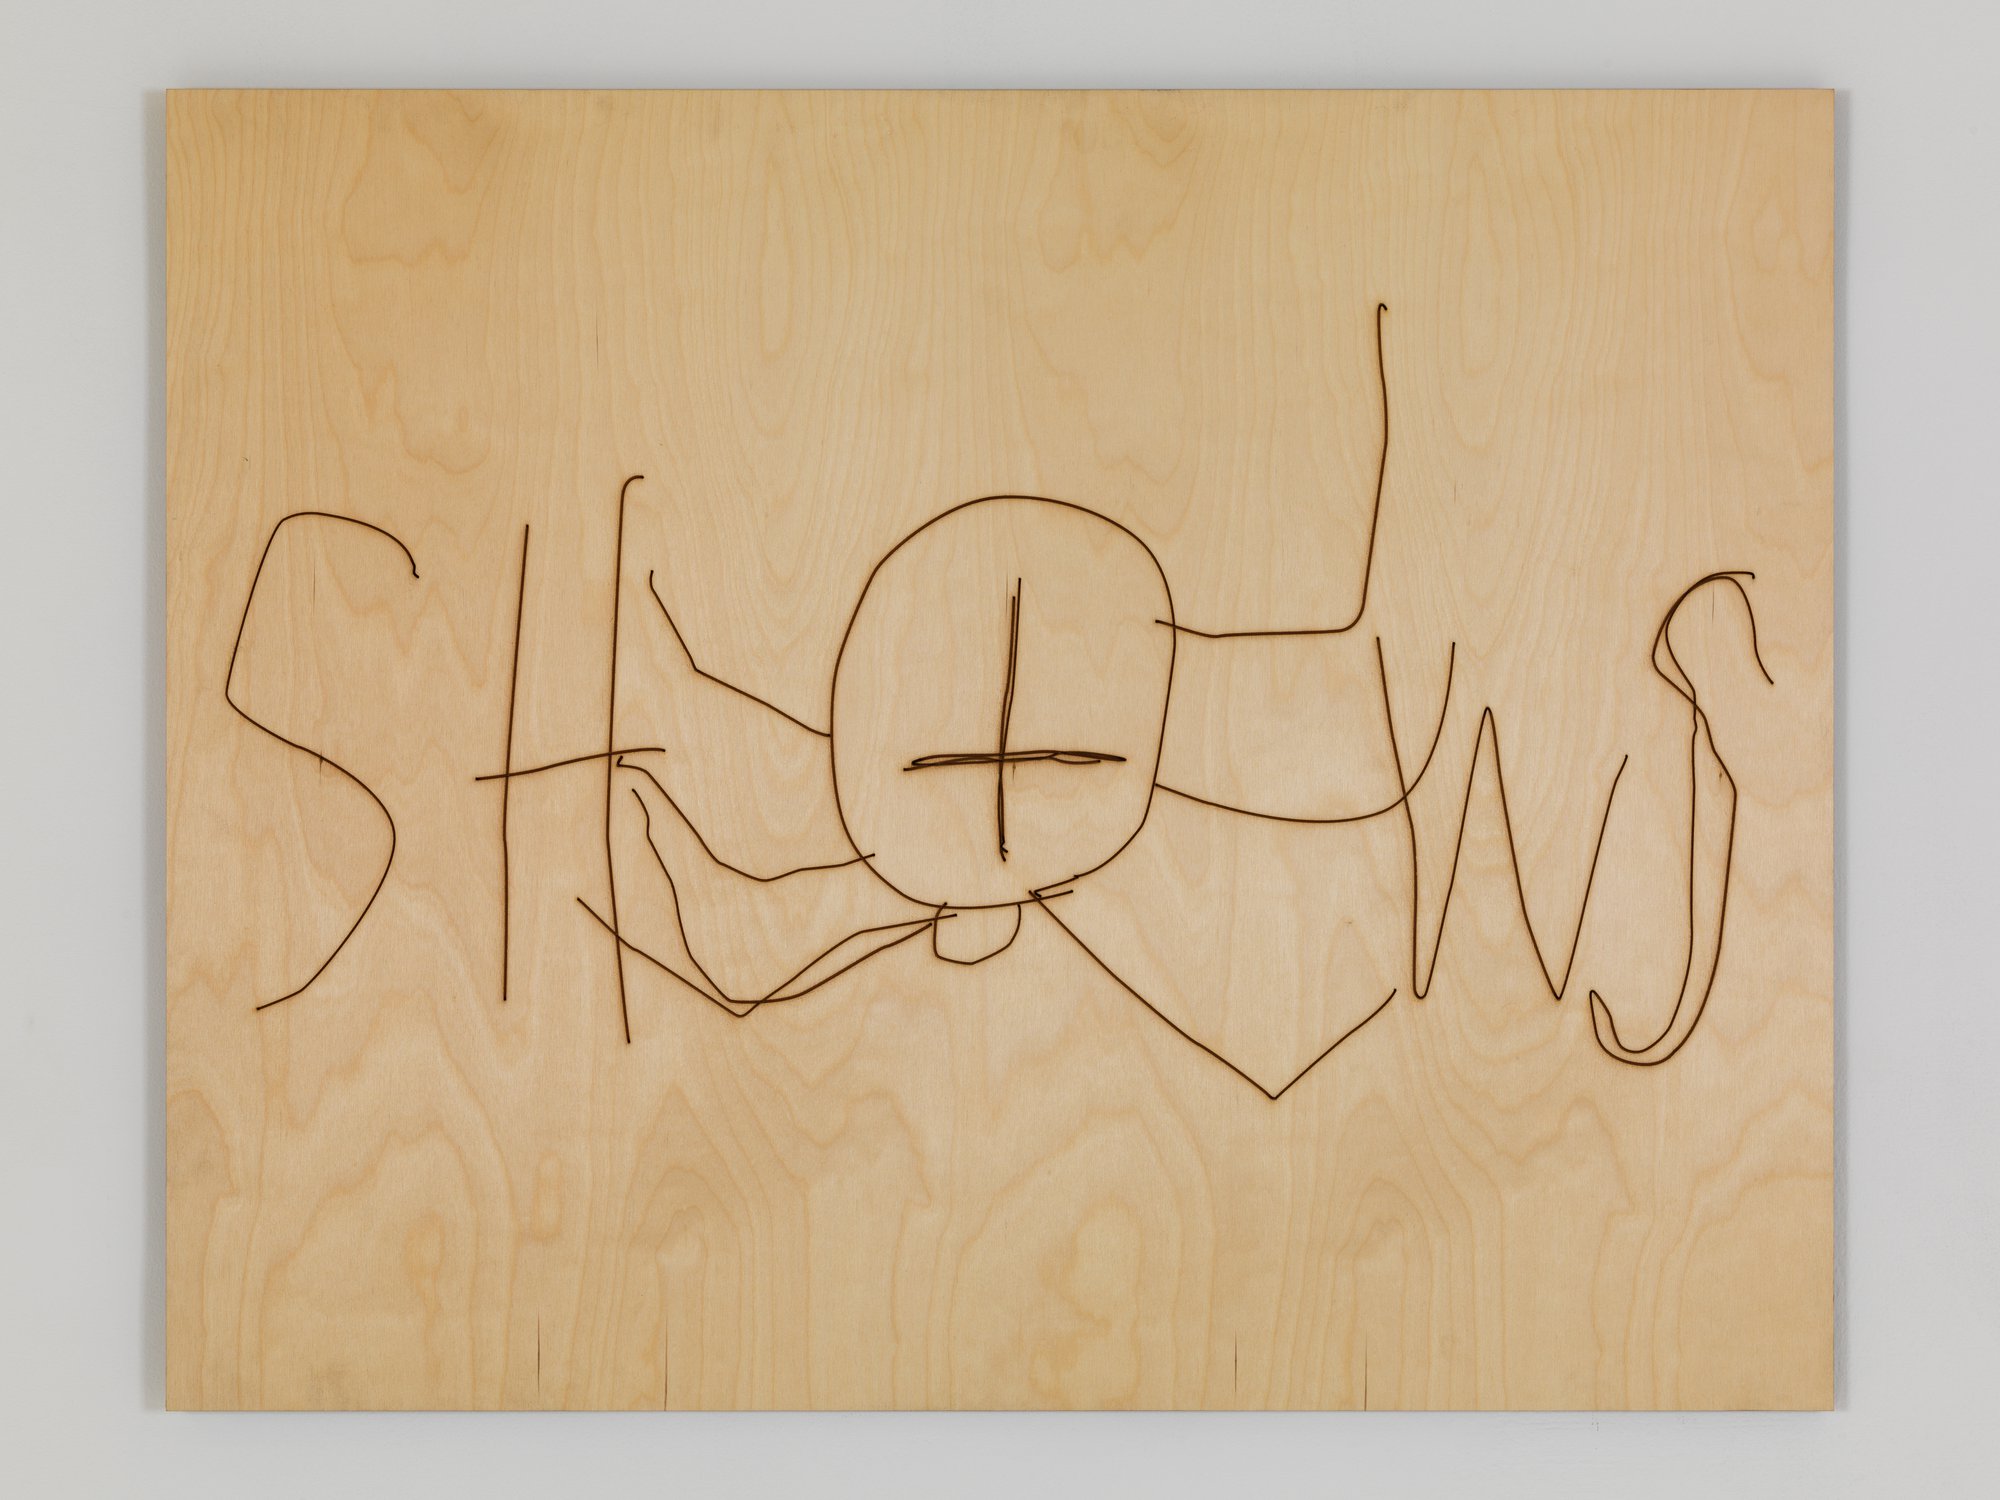 Sidsel Meineche Hansen, shows (cross work), lasercut drawing on plywood, 84 x 105 cm (33 1/8 x 41 3/8 in), 2018